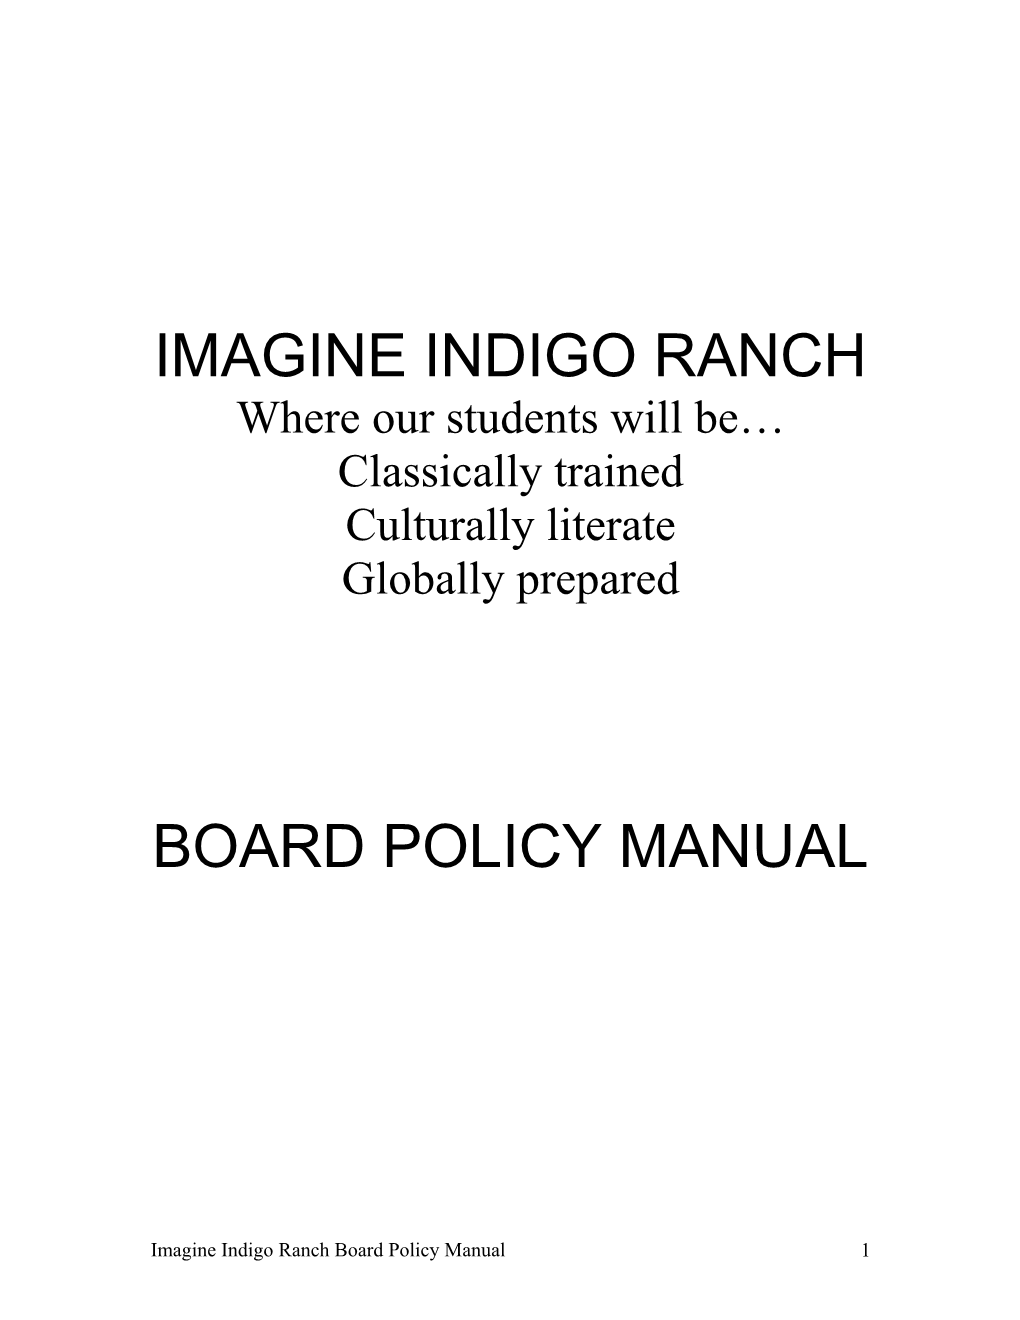 The Imagine Classical Academy at Indigo Ranch Board Policy Manual